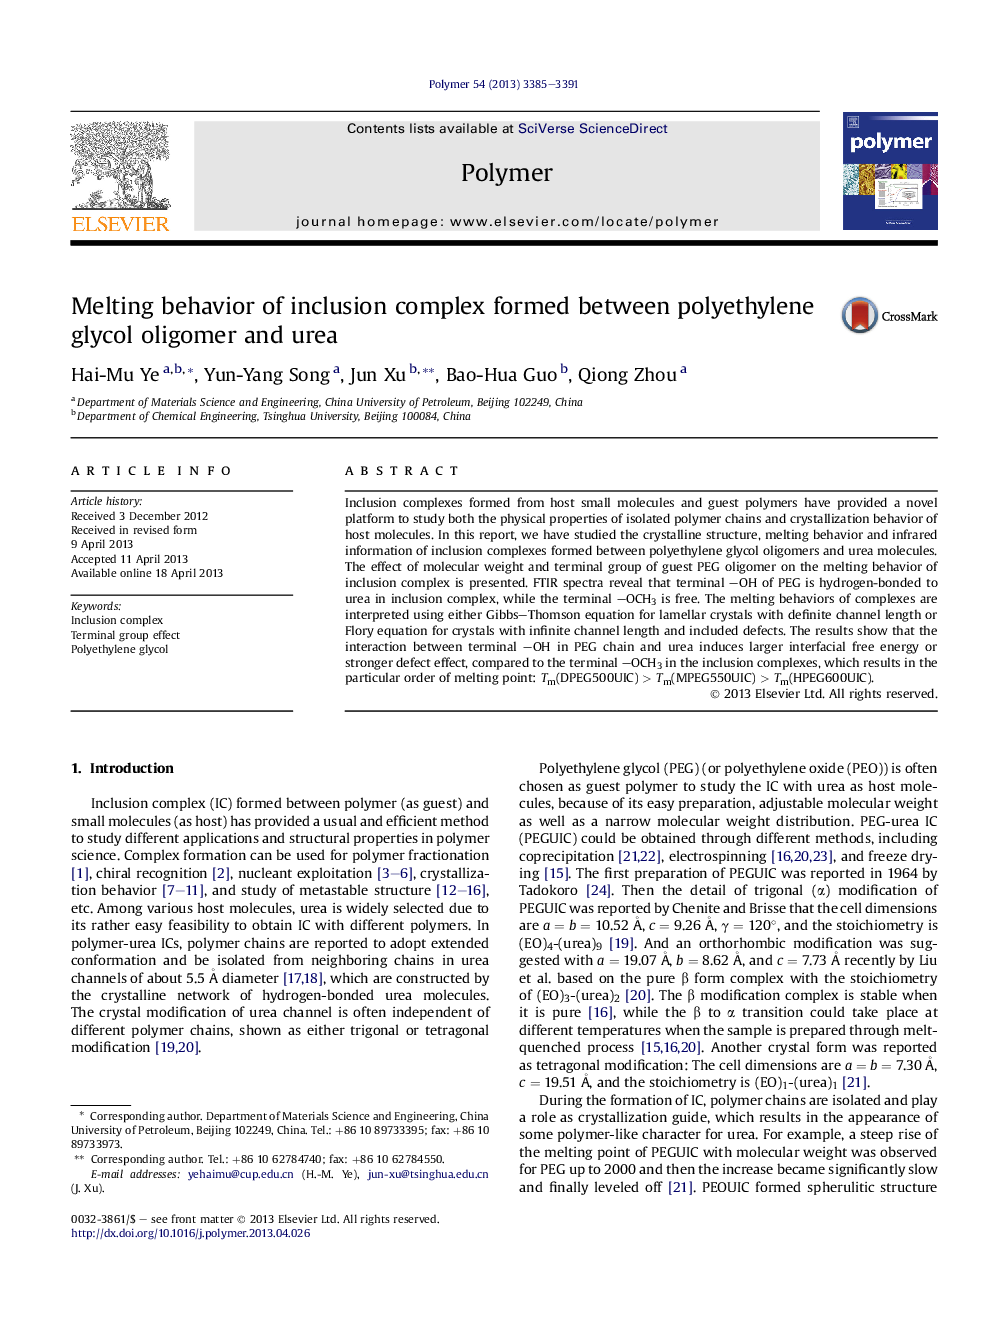 رفتار ذوب پیچیدگی ورودی بین پلی اتیلن گلیکول الیگومر و اوره تشکیل شده است 